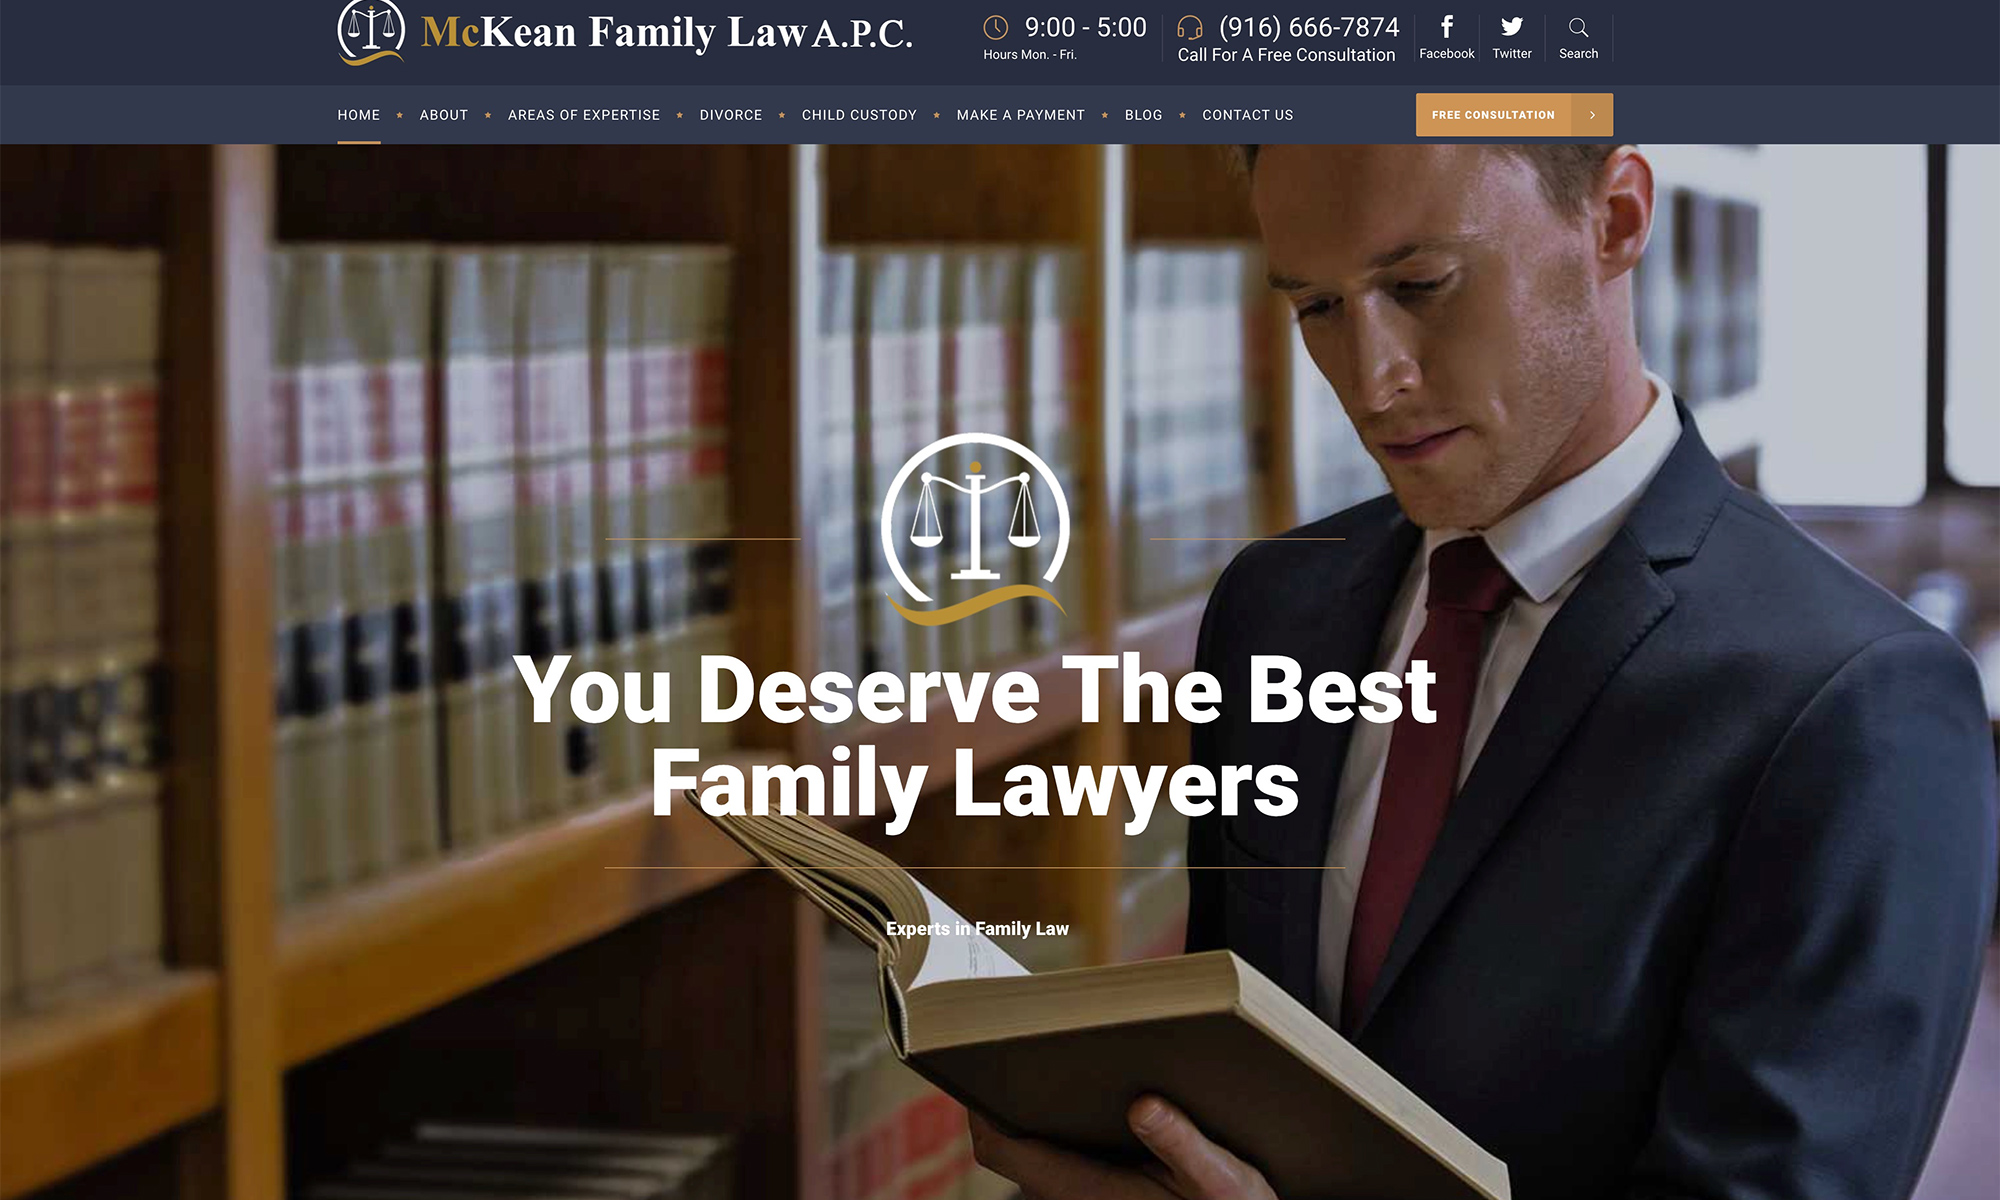 McKean Family Law